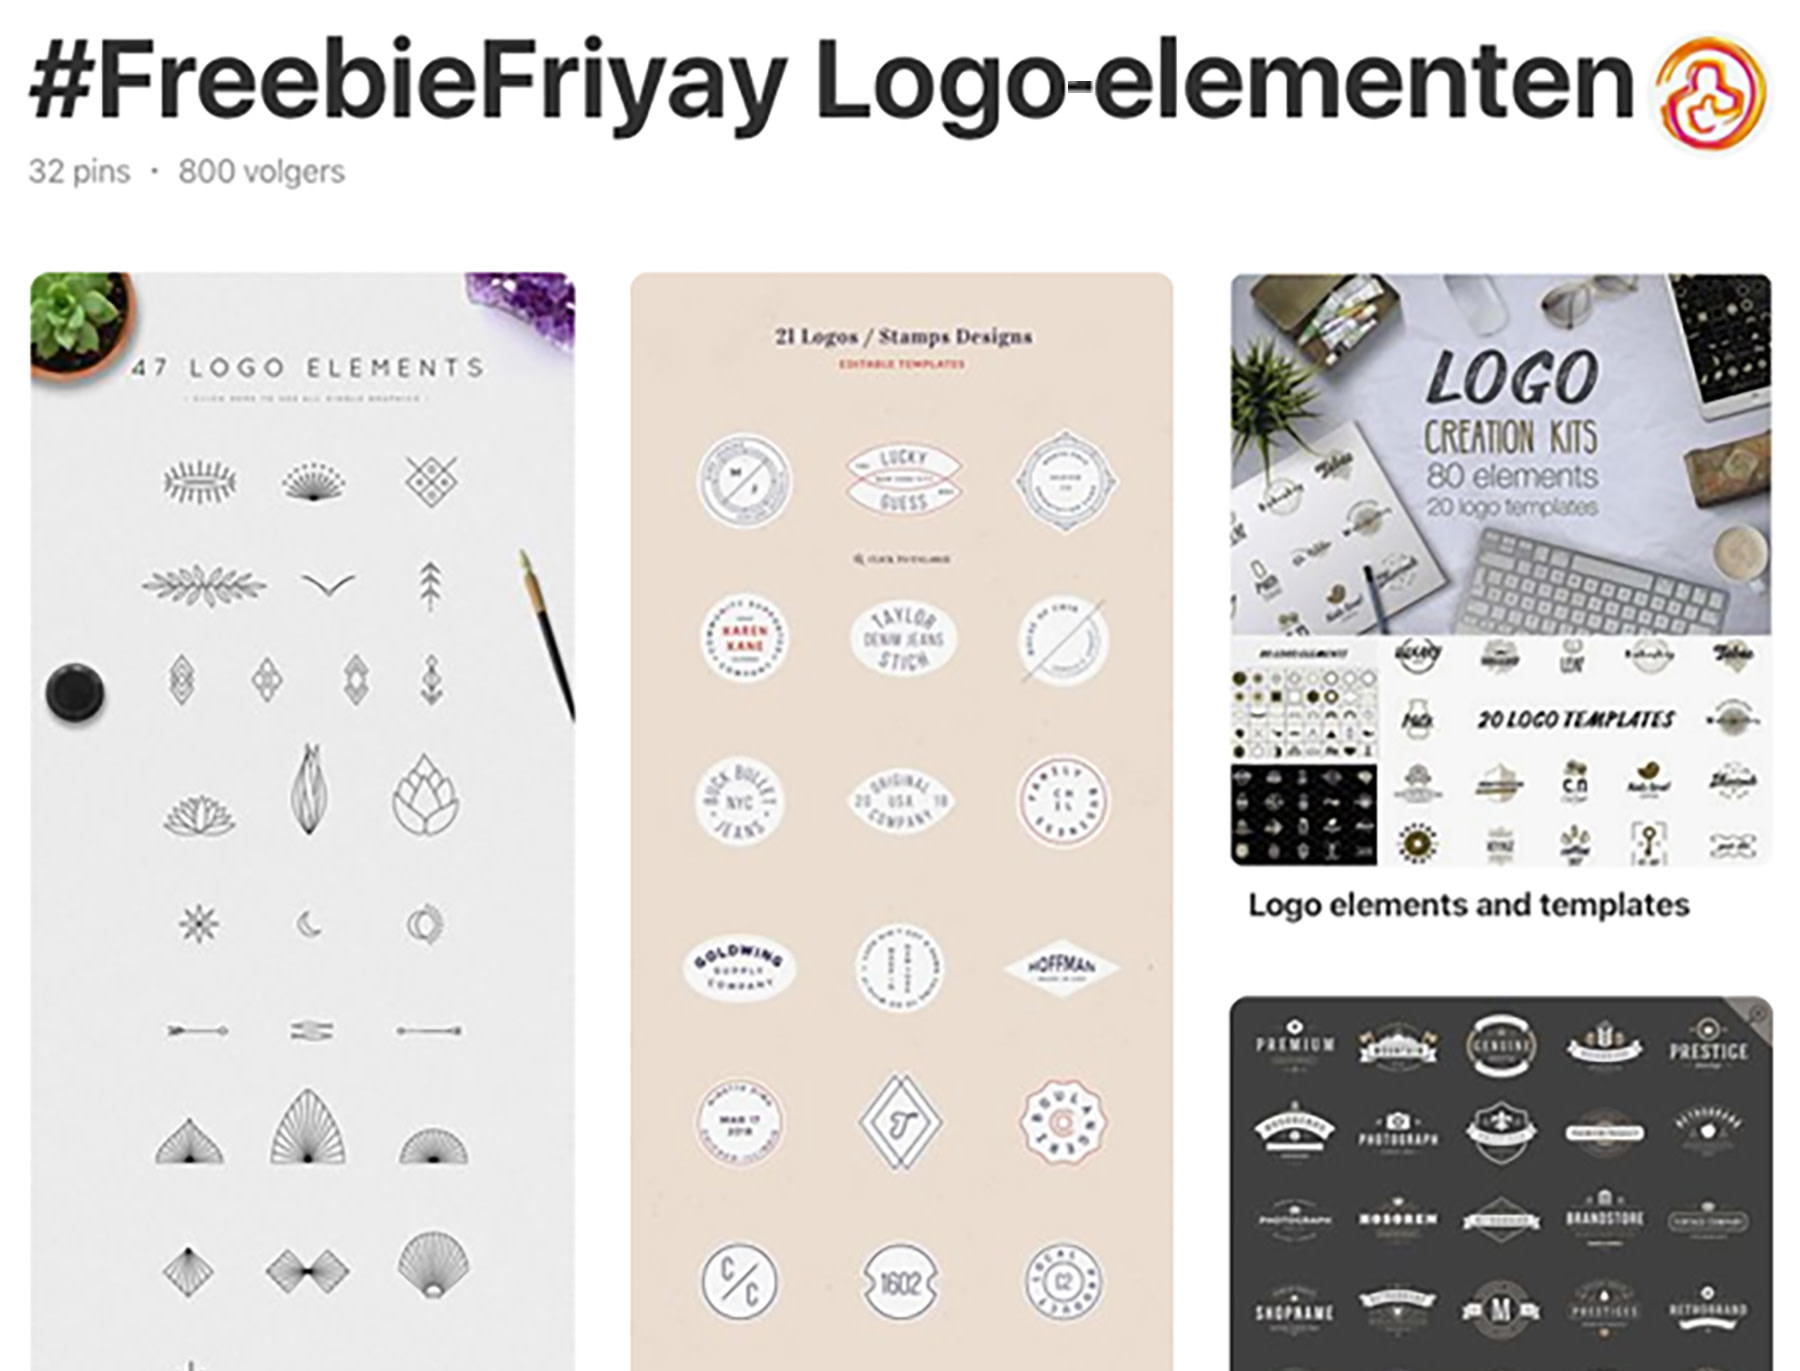 freebiefriyay-week-25 pinterest-logo-elementen